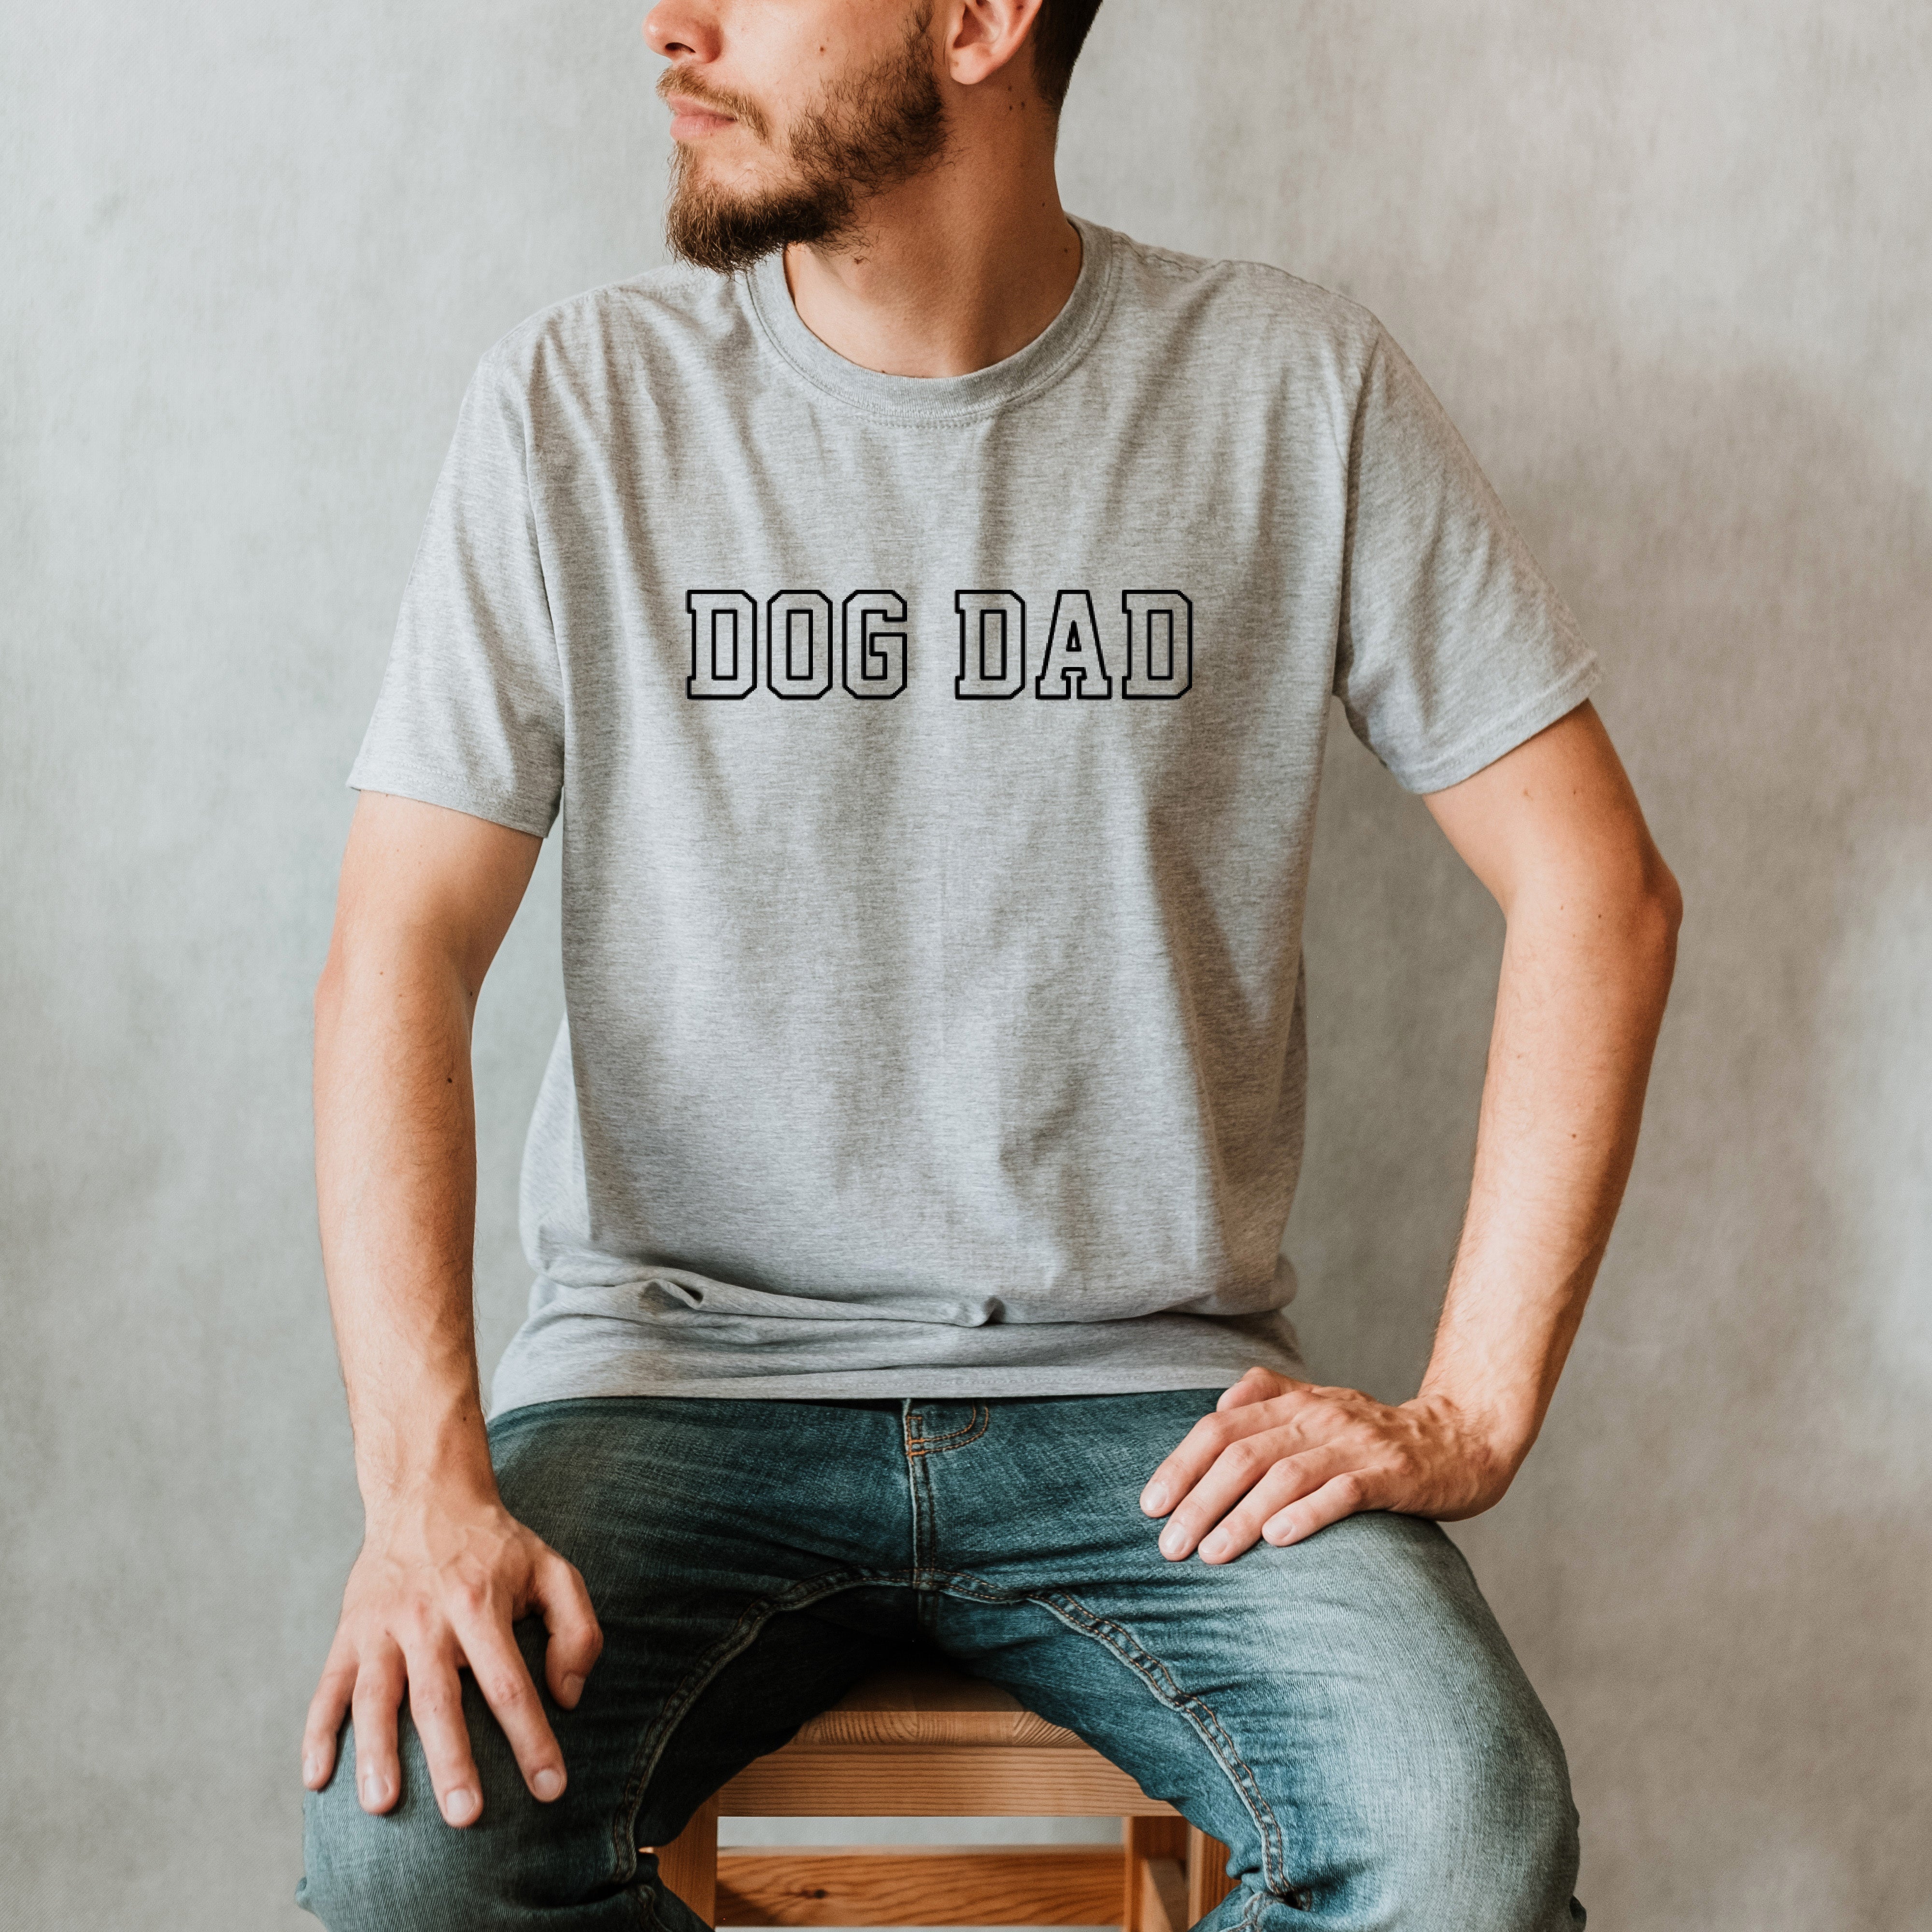 Dog Dad T-Shirt - Organic Cotton Men's TShirt